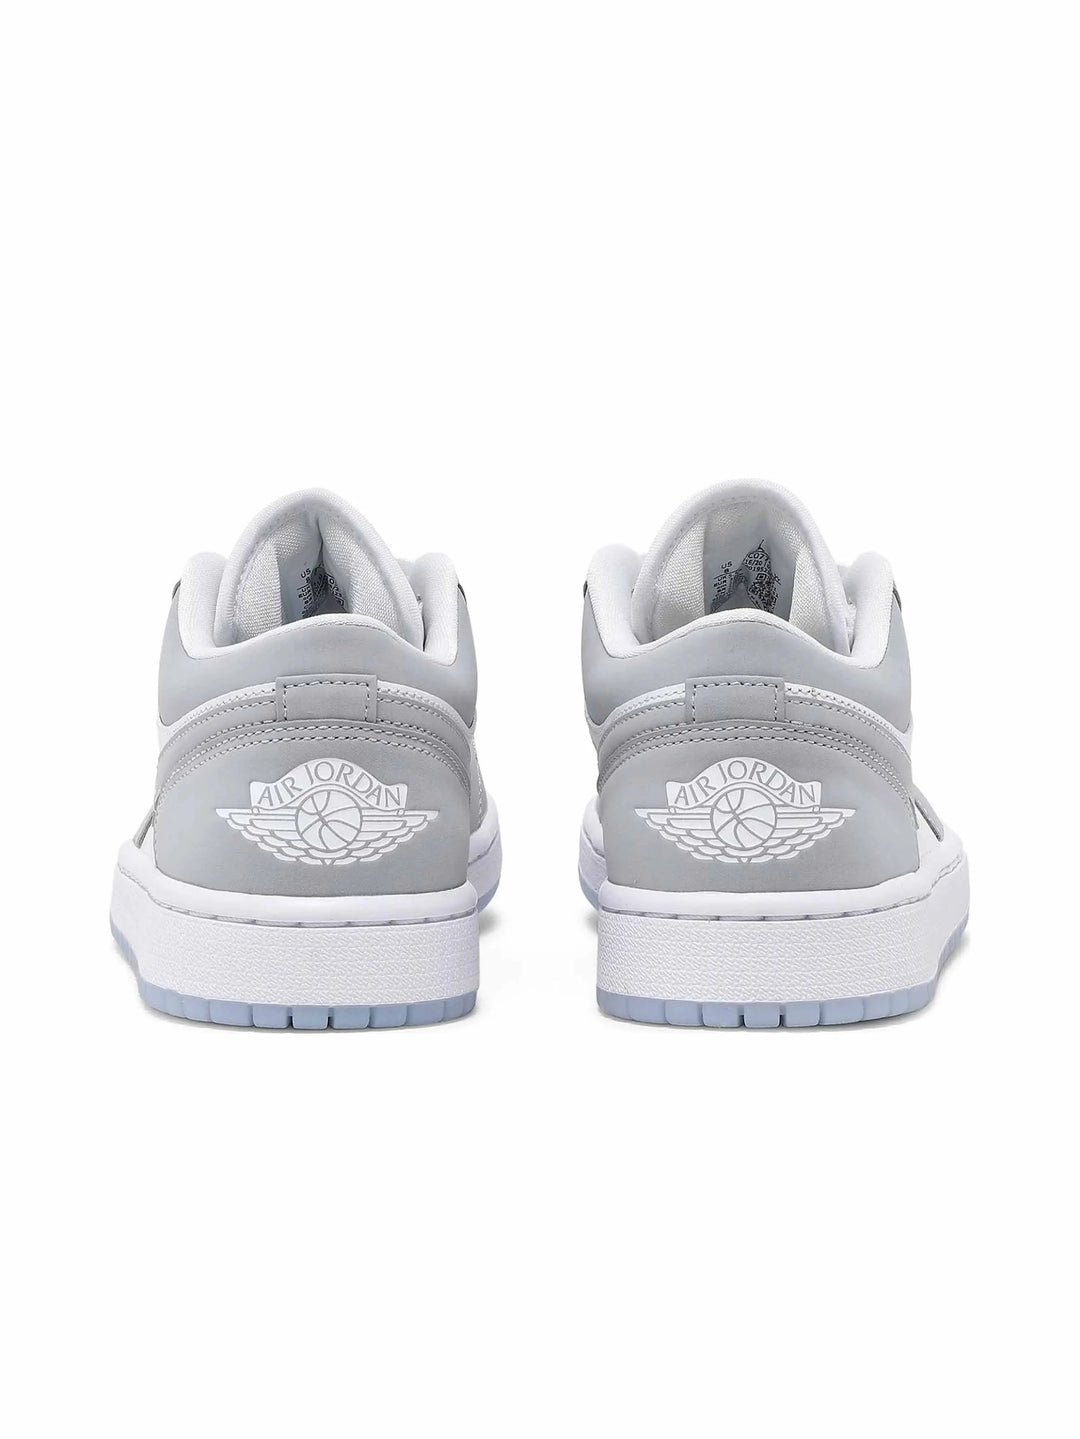 Nike Air Jordan 1 Low Wolf Grey (W) - Prior